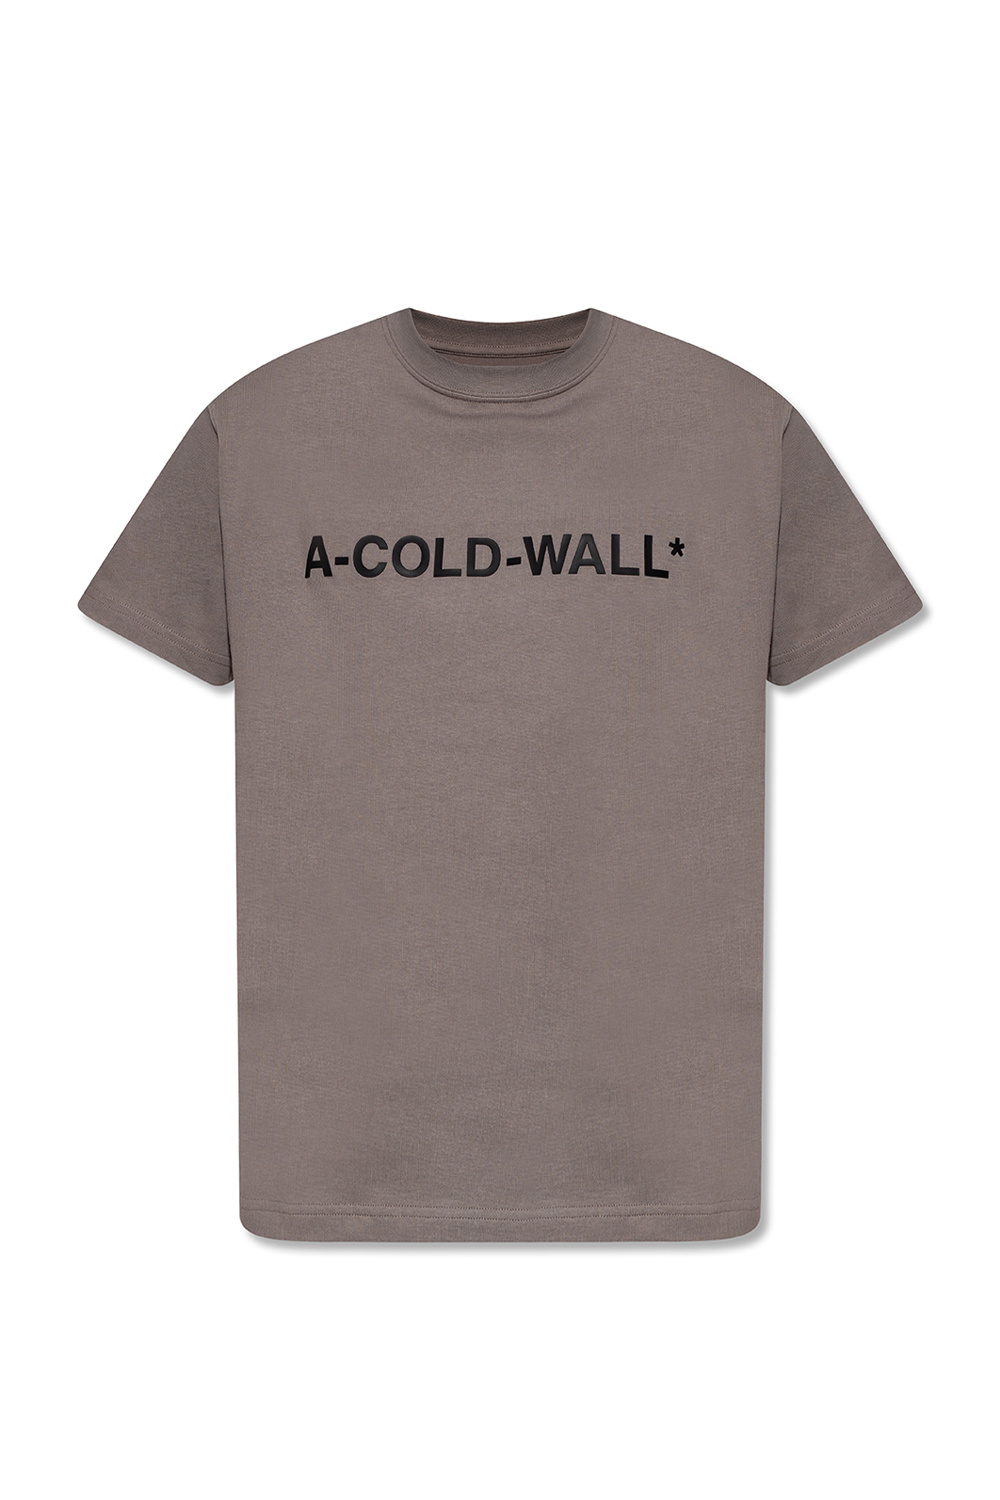 A-COLD-WALL* Logo T-shirt